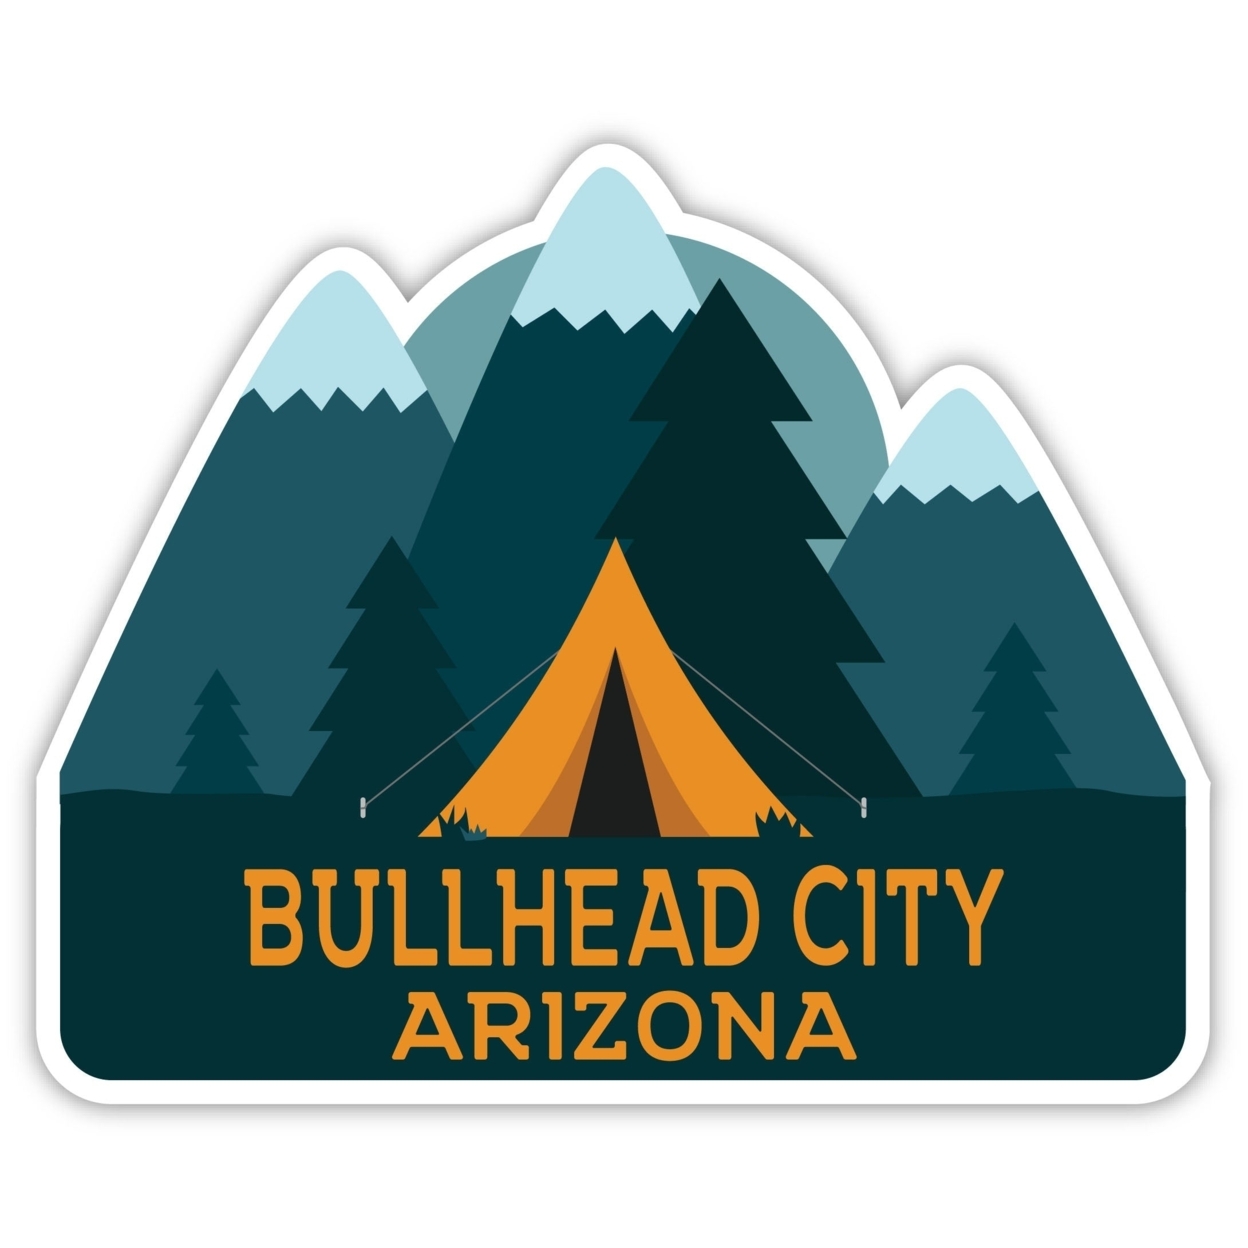 Bullhead City Arizona Souvenir Decorative Stickers (Choose Theme And Size) - 4-Pack, 4-Inch, Tent